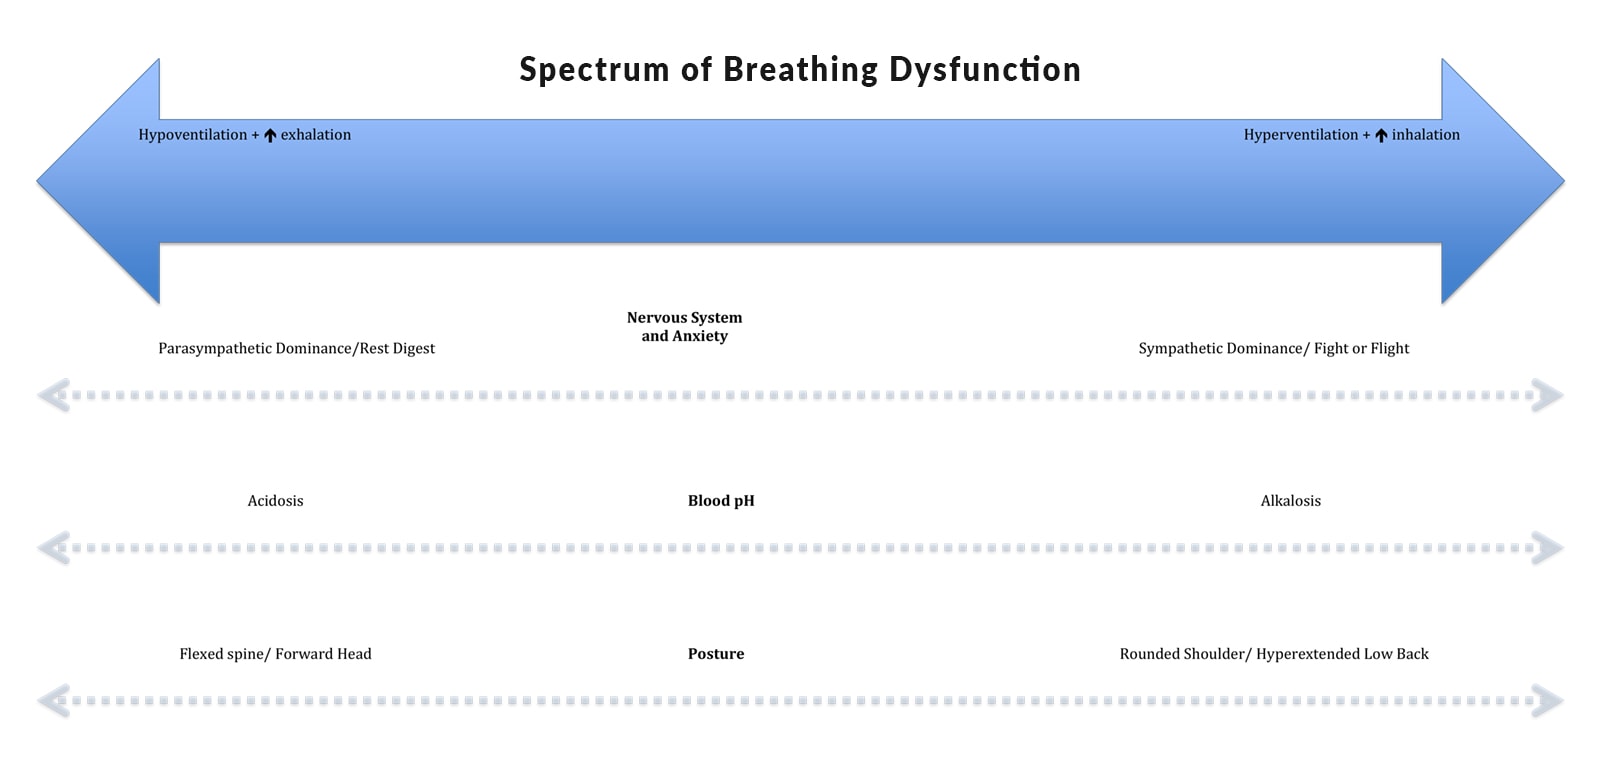 SpectrumBreathingDysfunction_Diagram